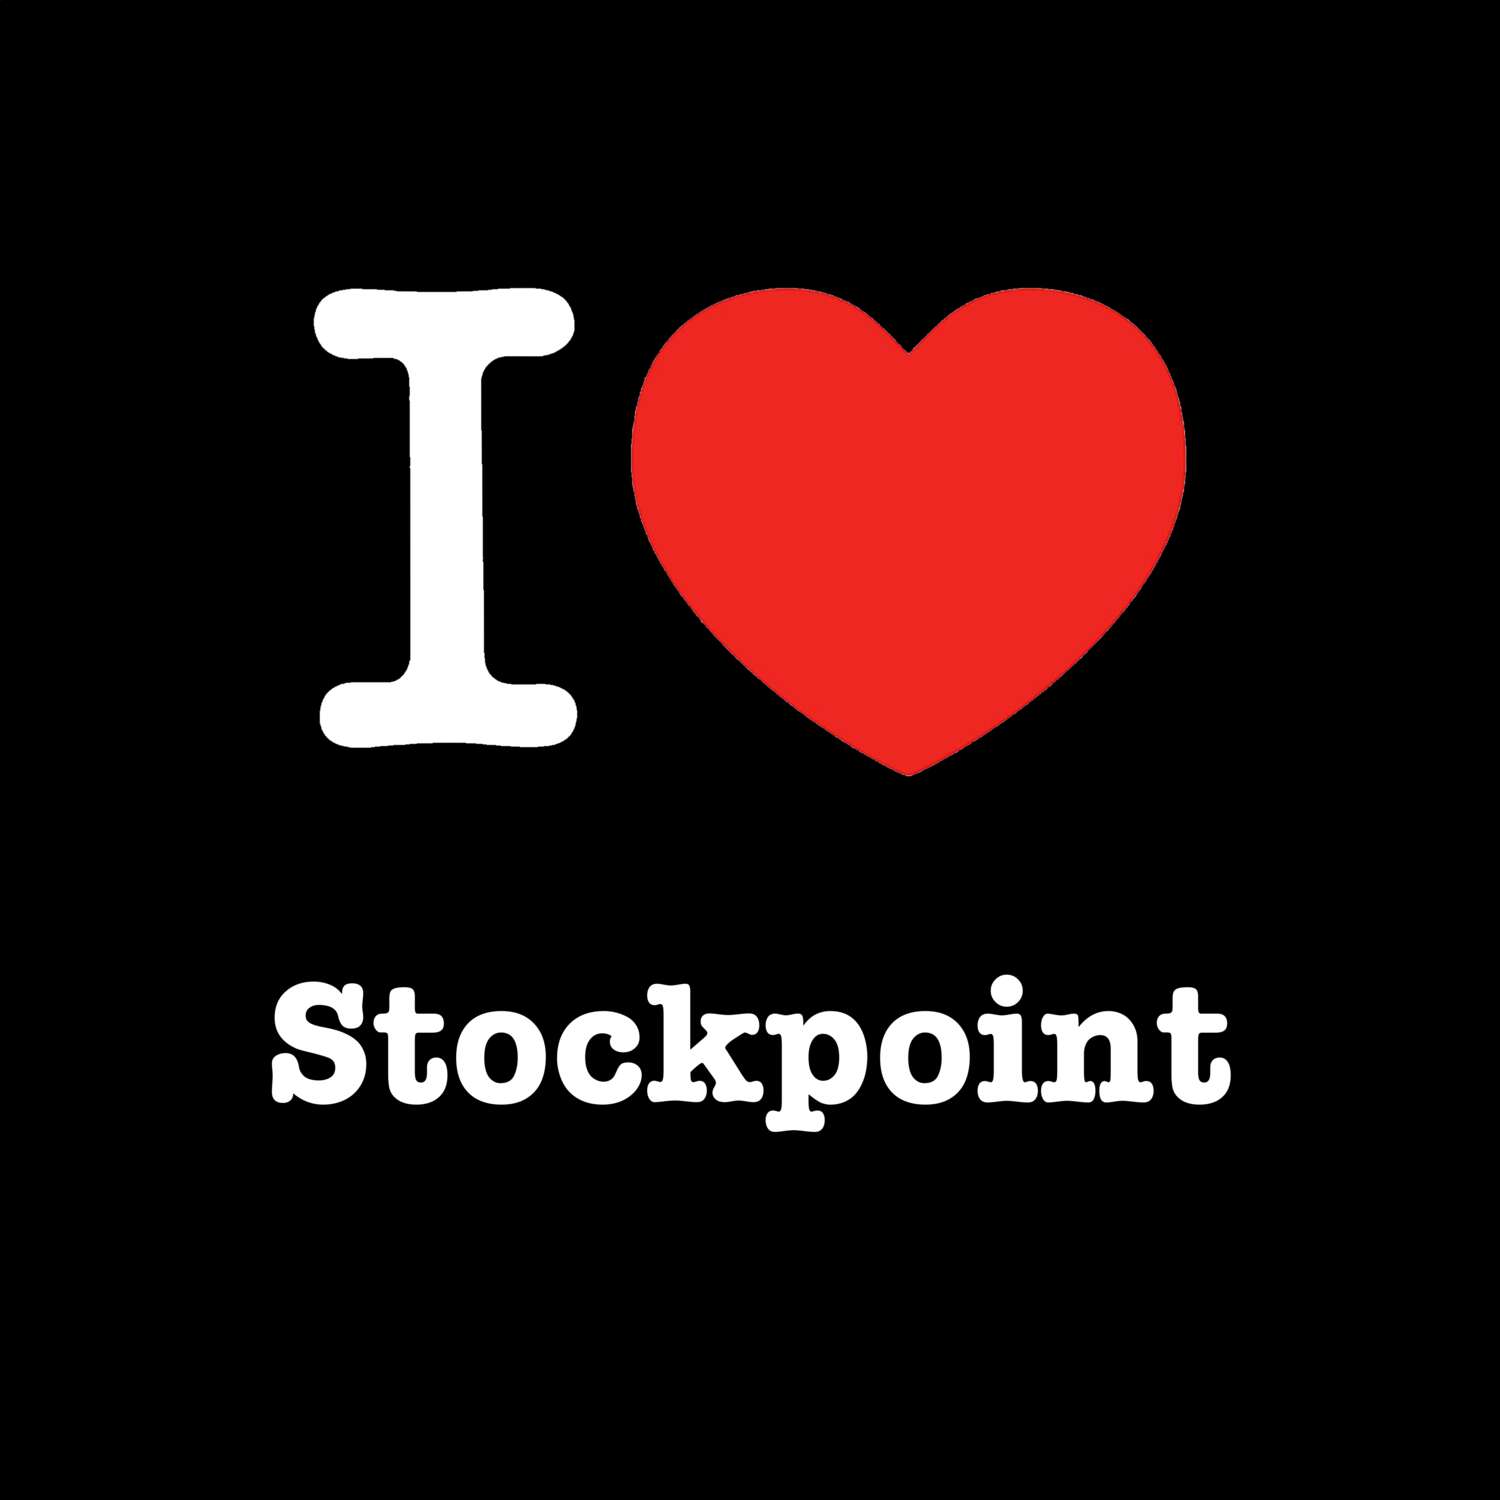 Stockpoint T-Shirt »I love«